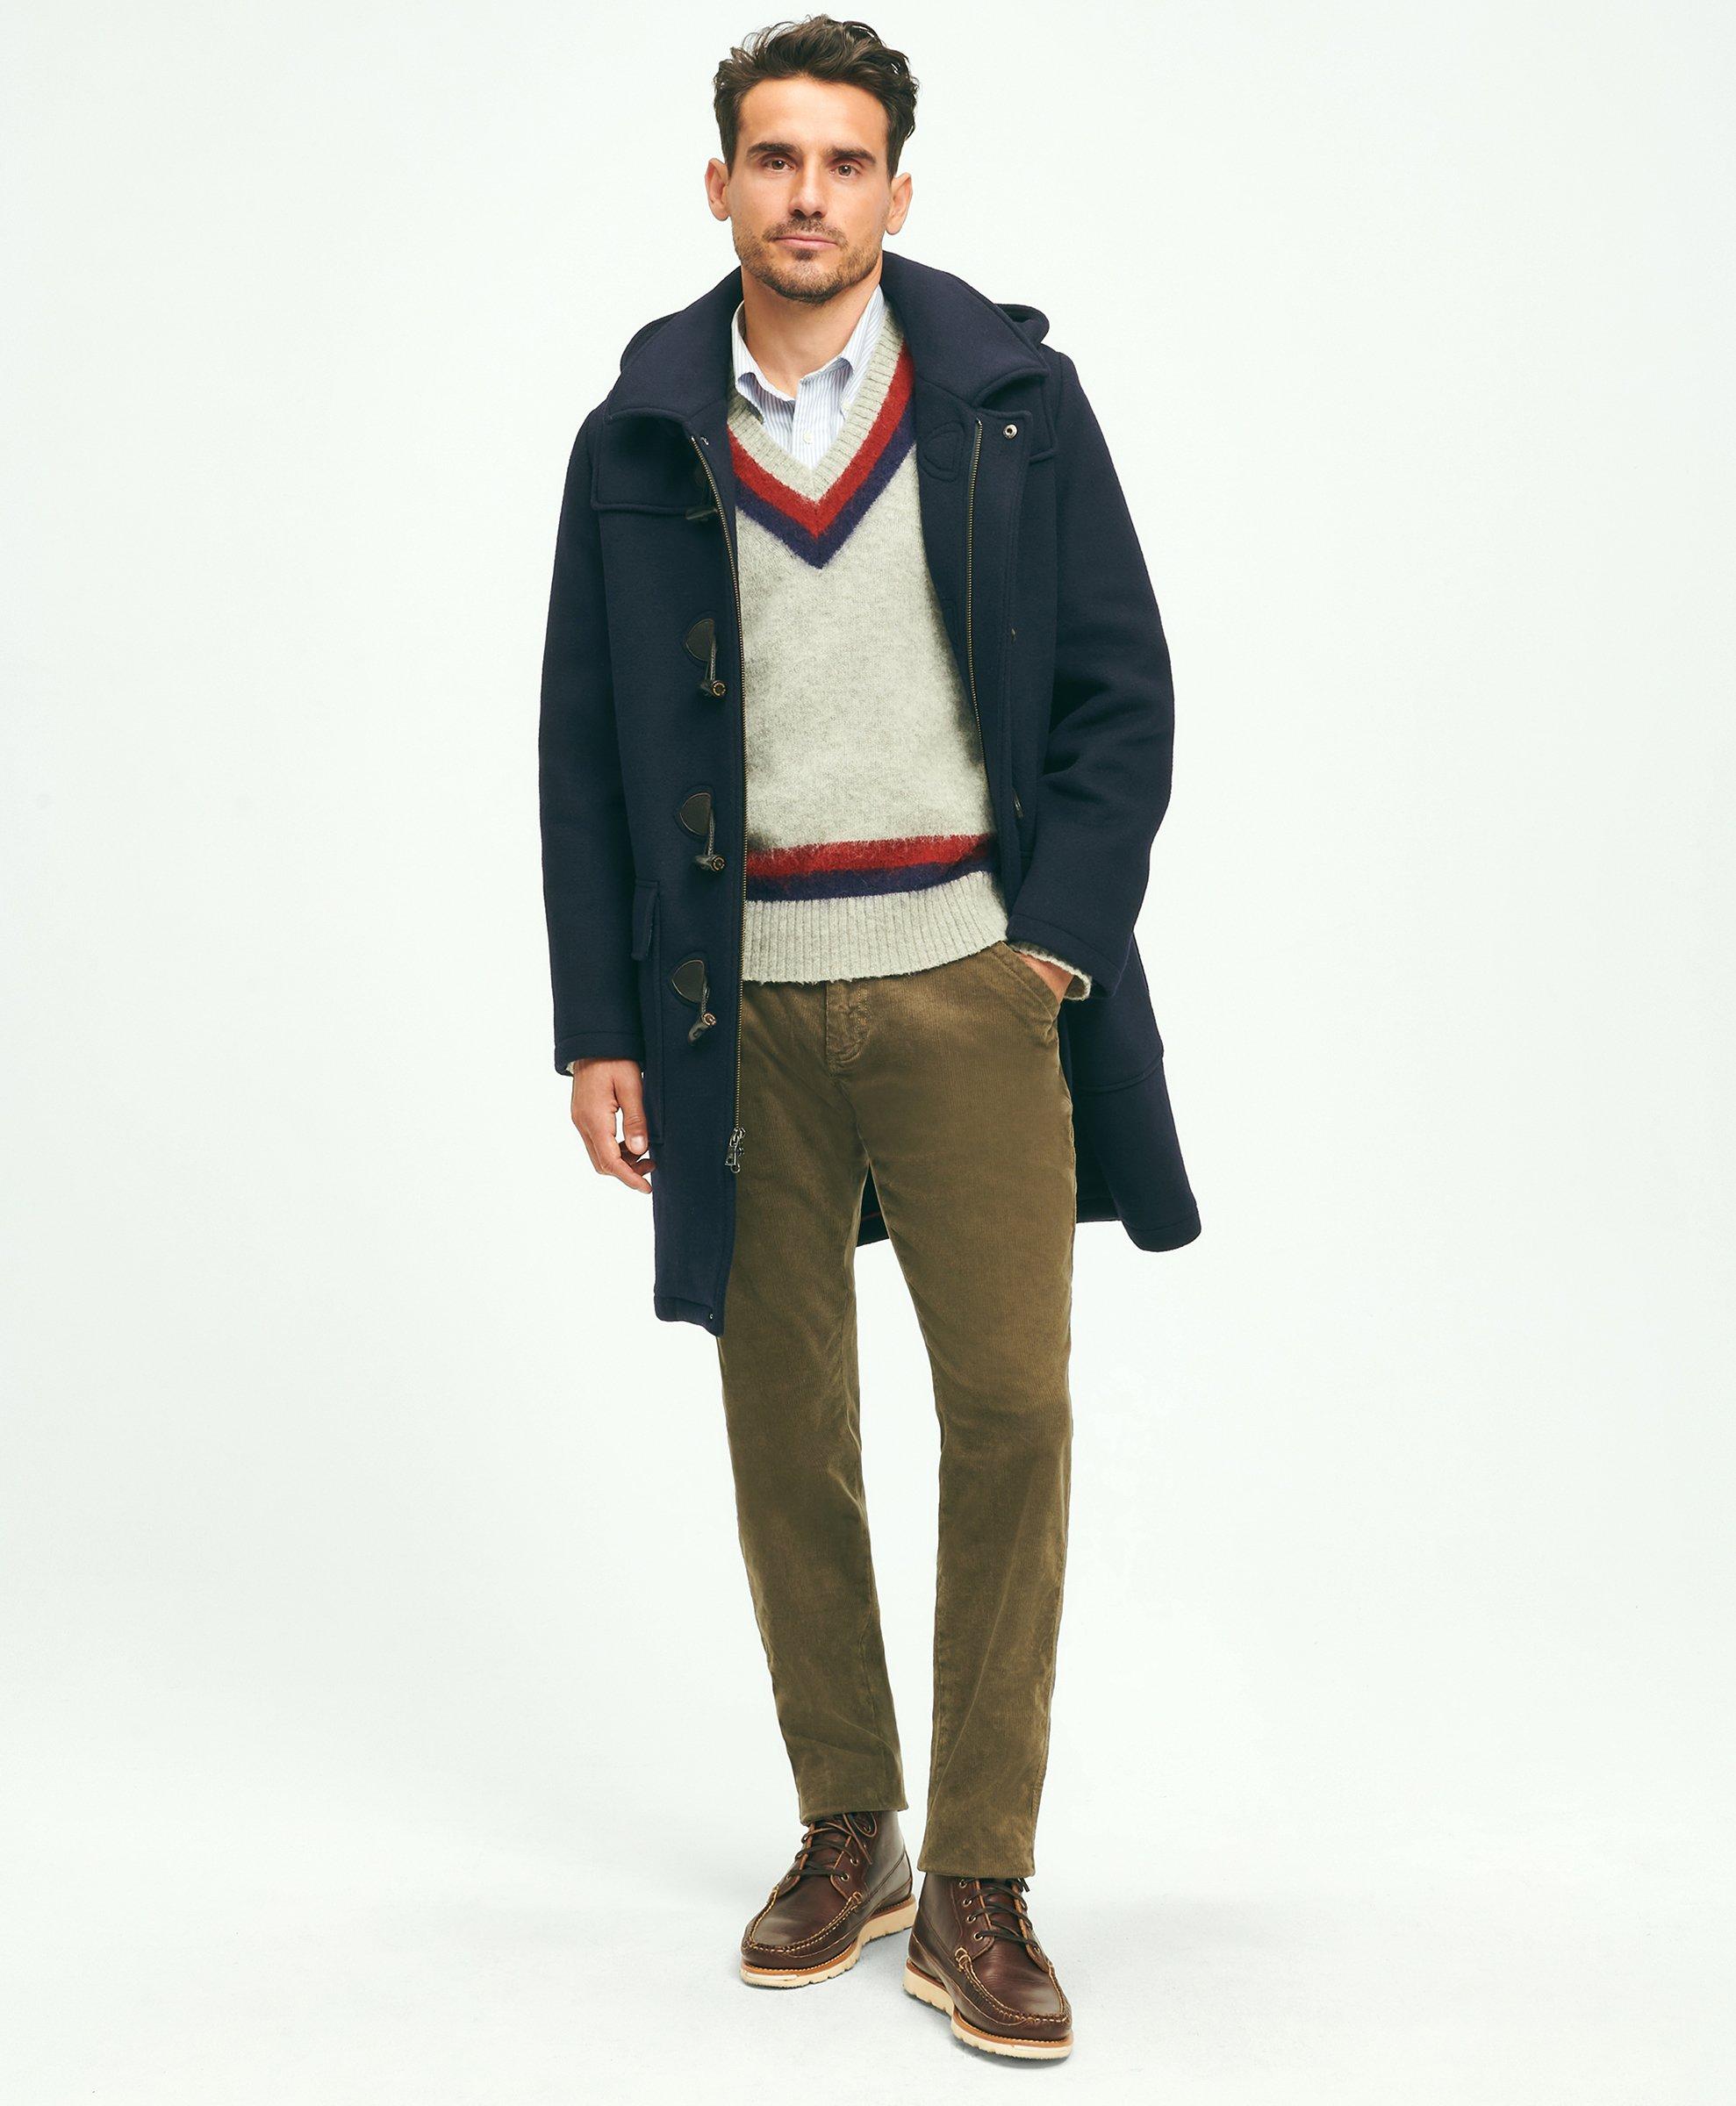 Shop Men's Outerwear | Coats, Jackets & Windbreakers | Brooks Brothers